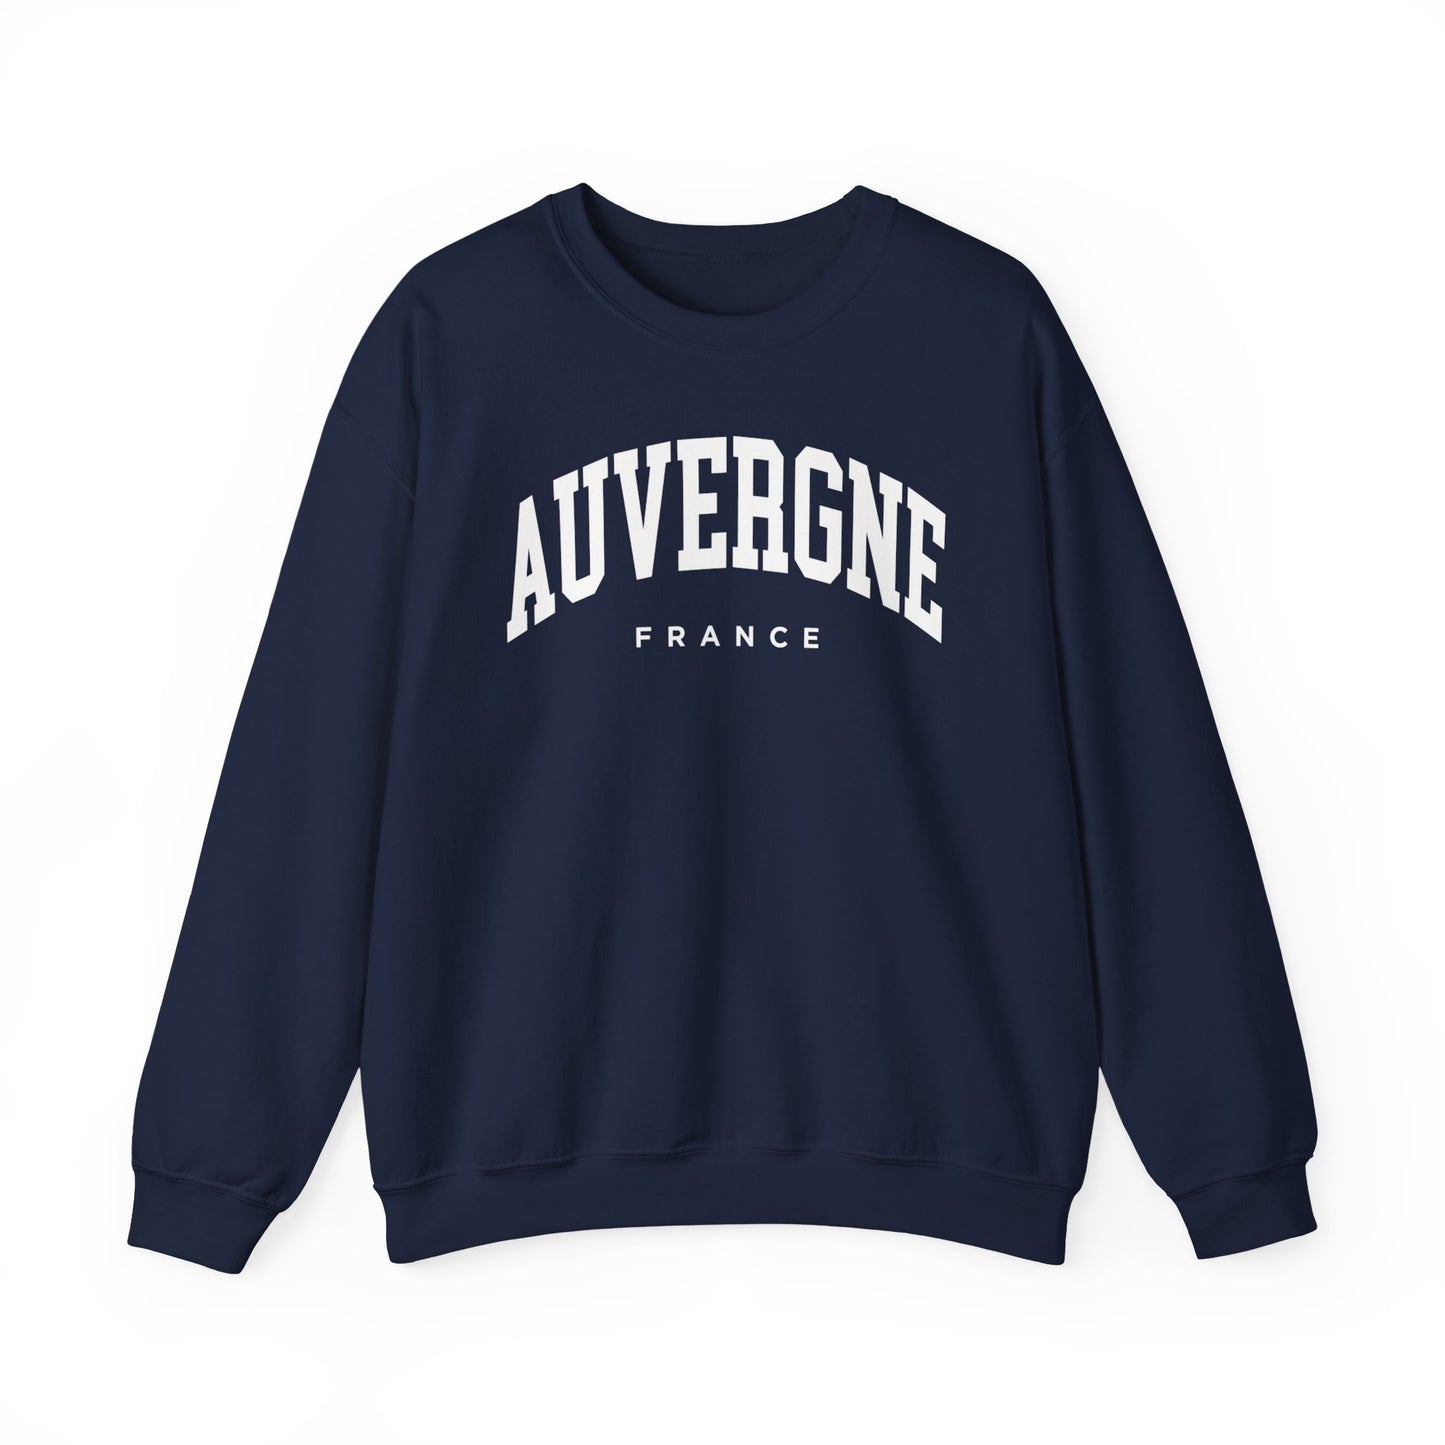 Auvergne France Sweatshirt